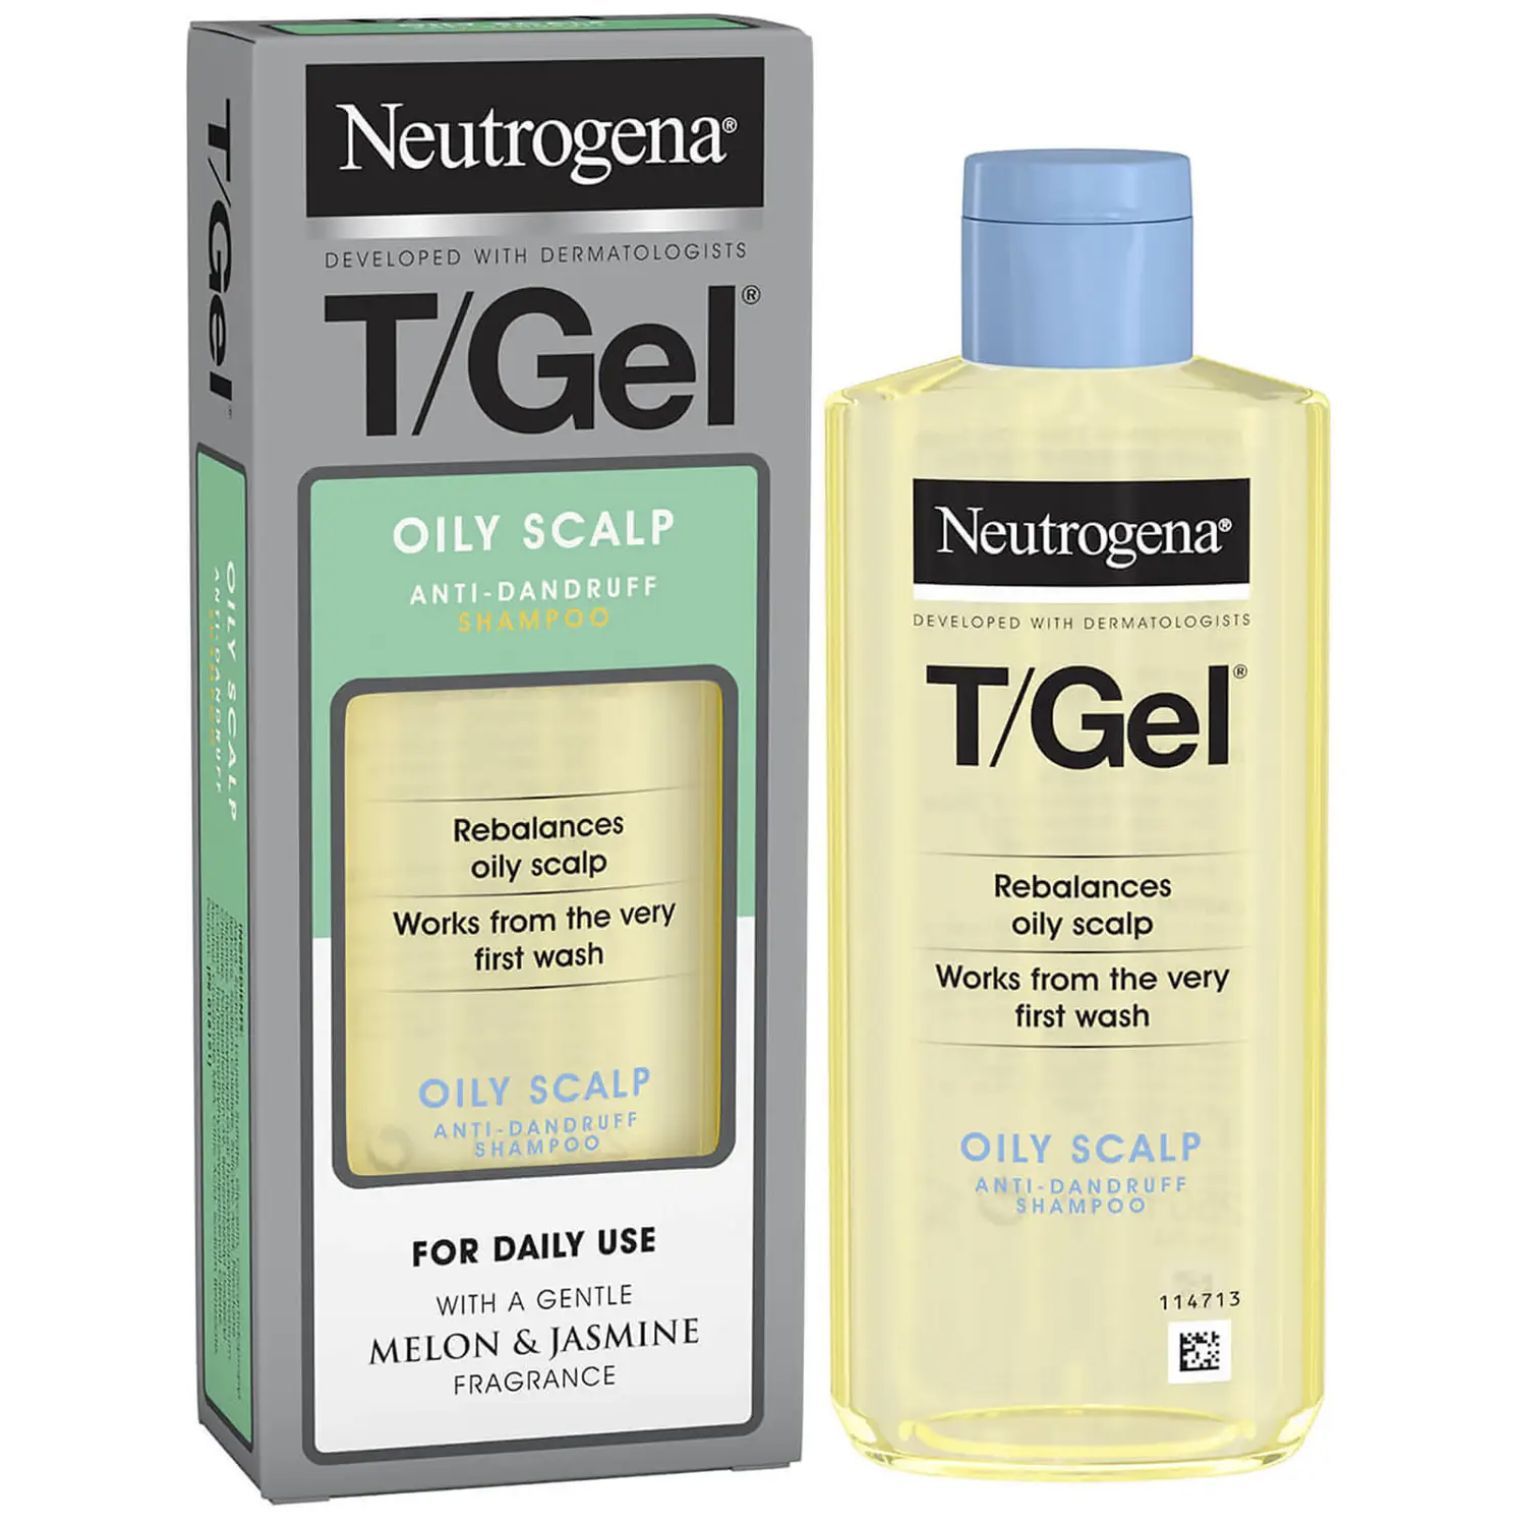 Shampoo gel. Neutrogena, t/Gel. Oily Scalp. Neutrogena t Gel купить. Neutrogena t/Gel шампунь аналоги дешевле.